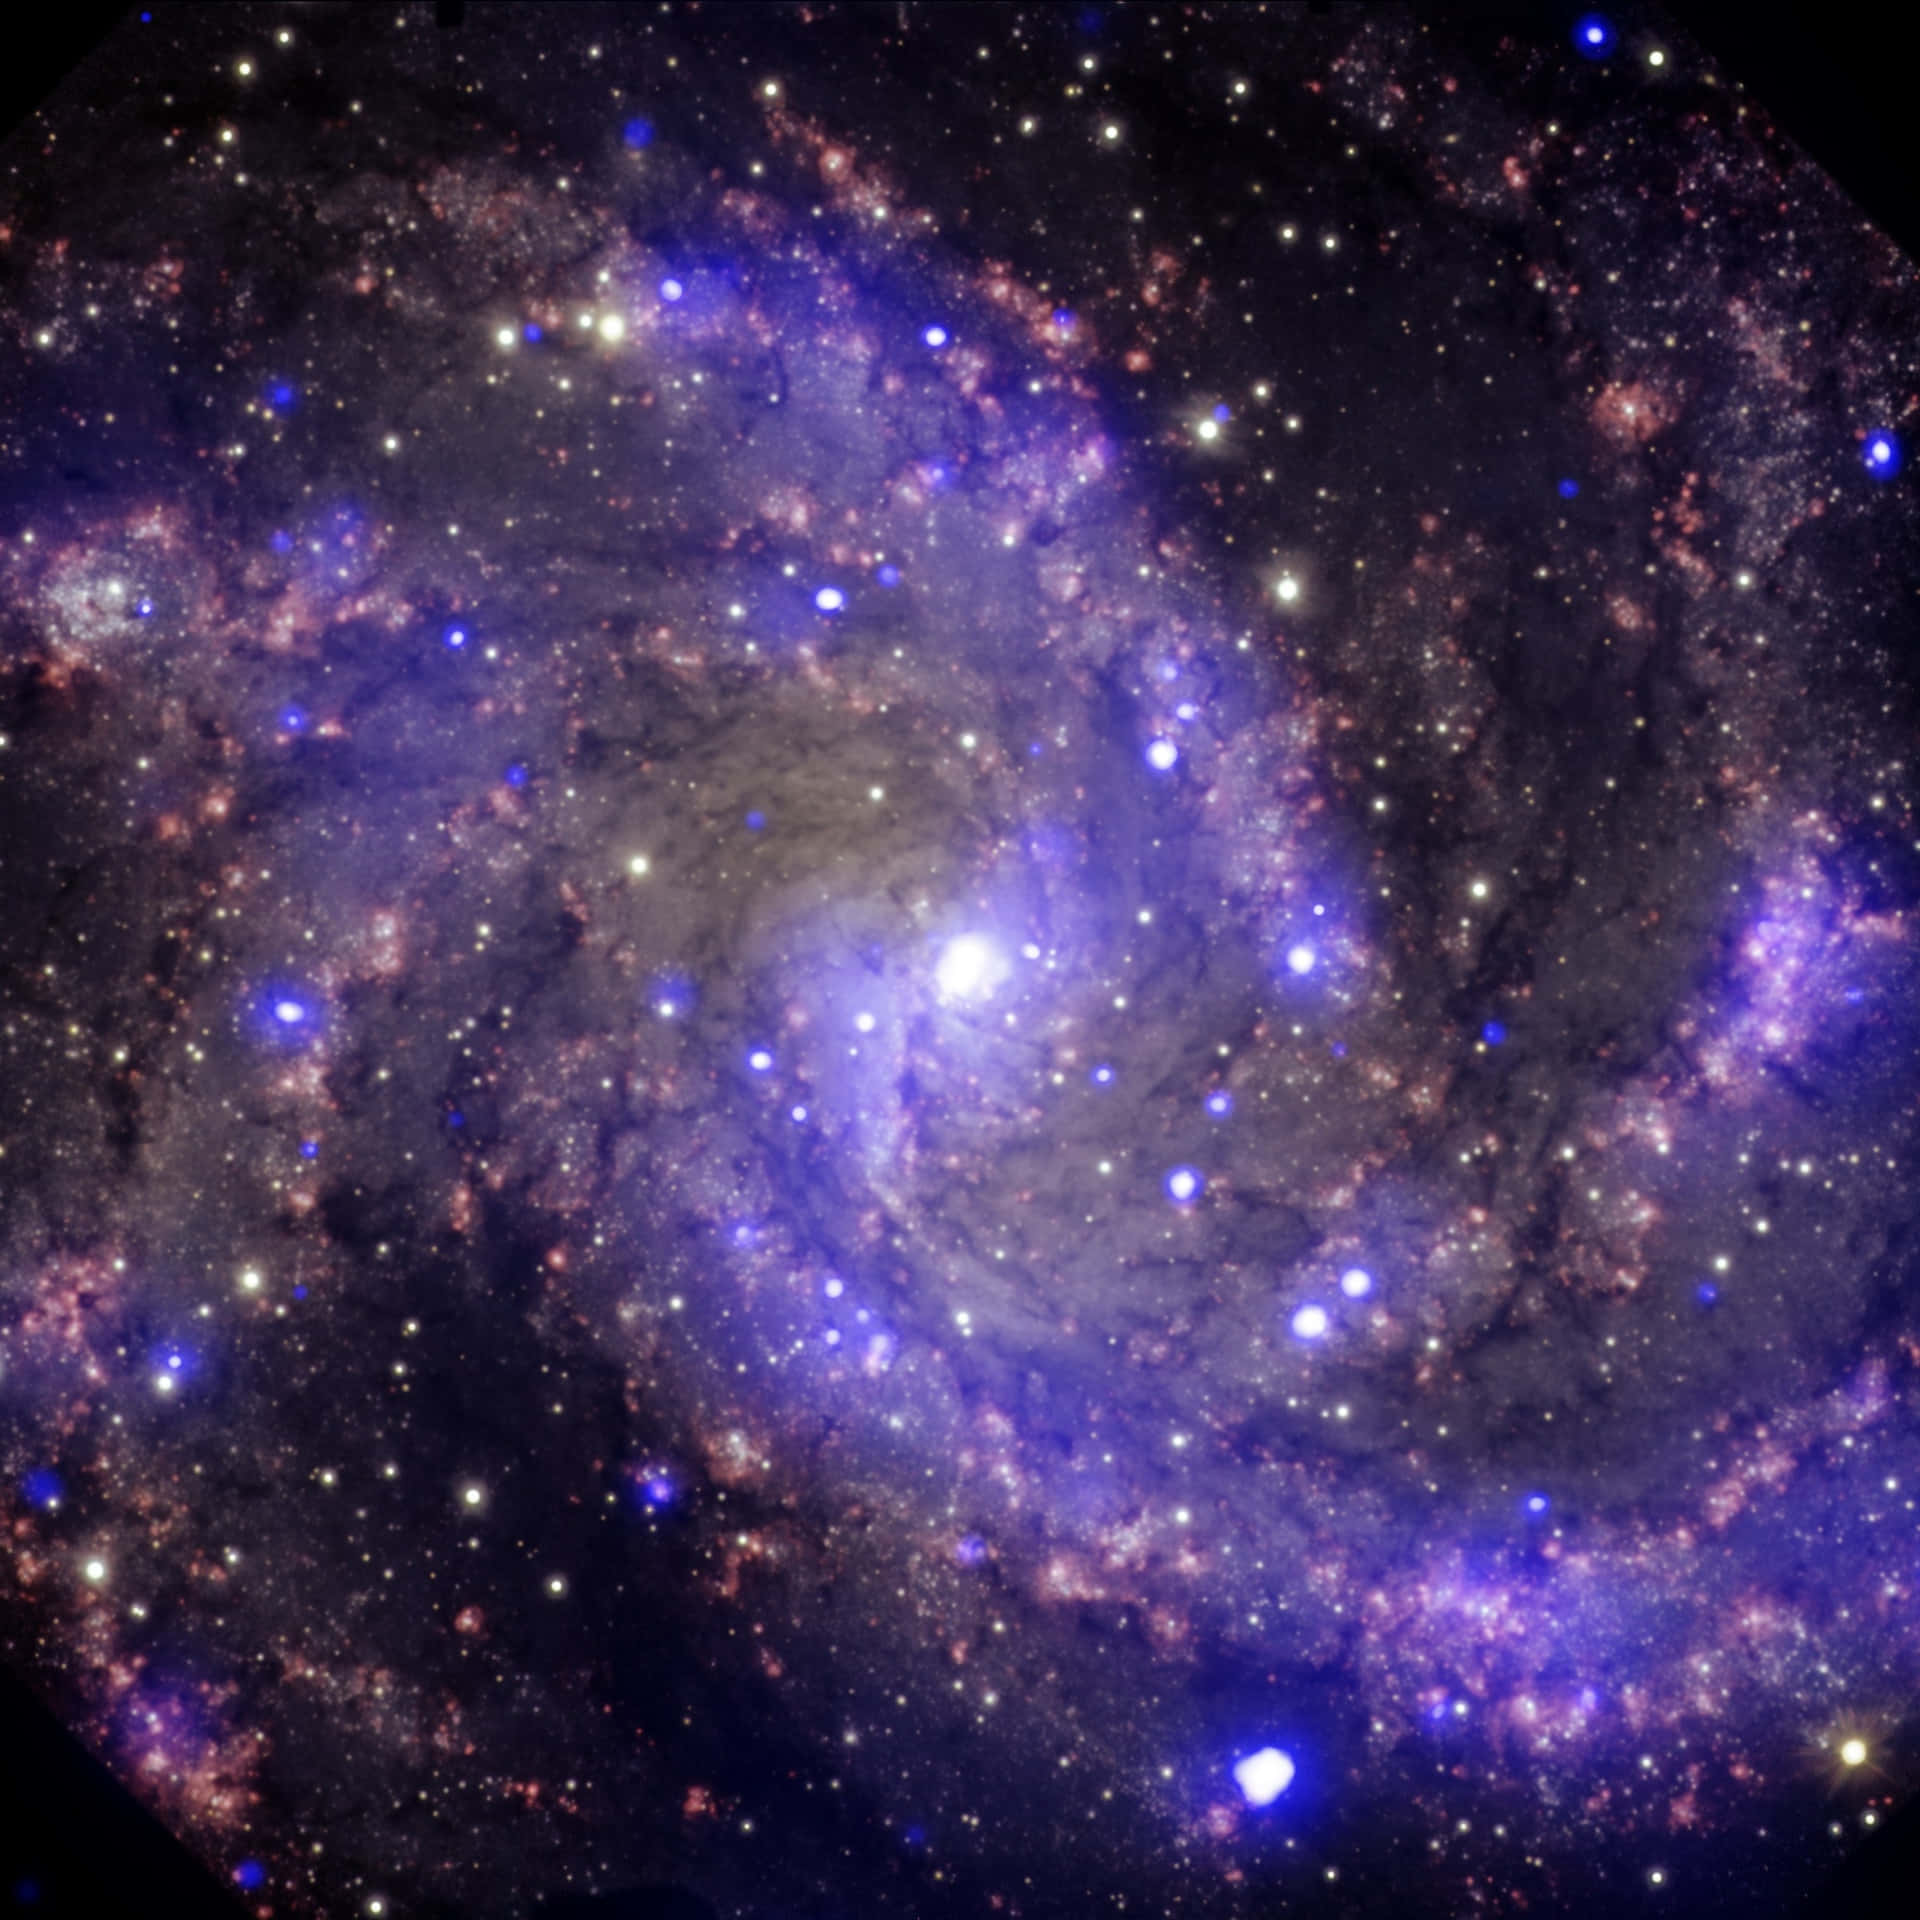 "Stunning Nasa Galaxy Picture"